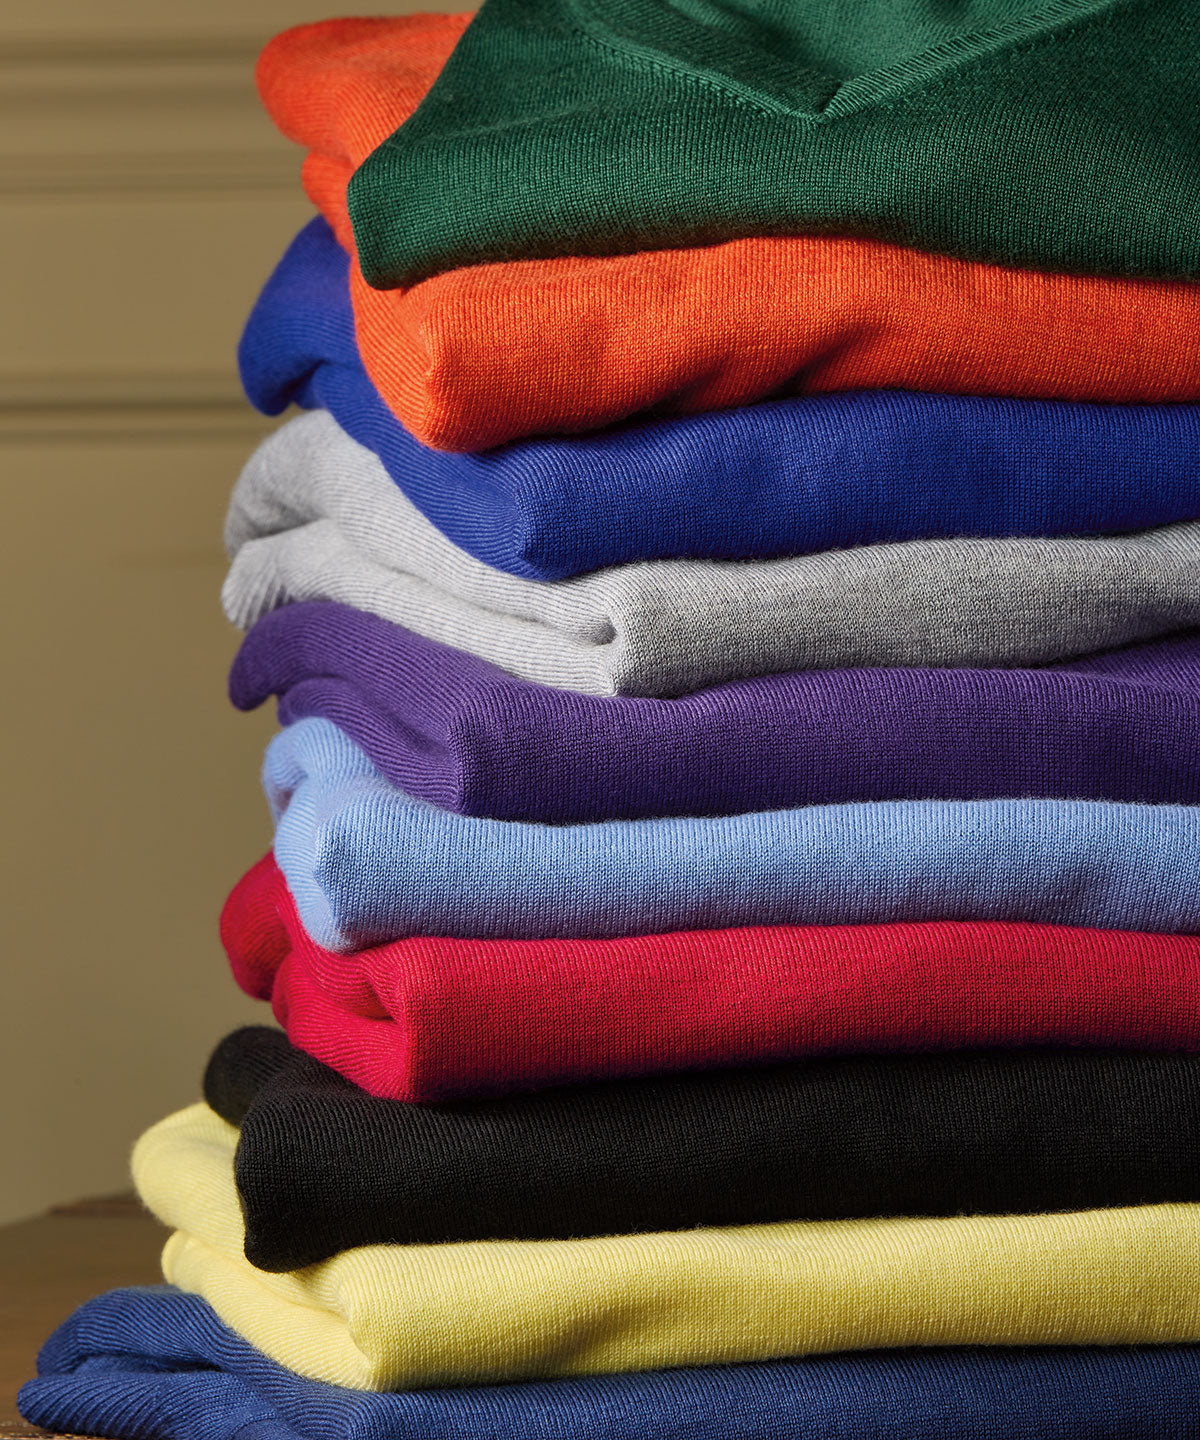 Bobby Jones 100% Merino Wool V-Neck Sweater- Green - Size XL